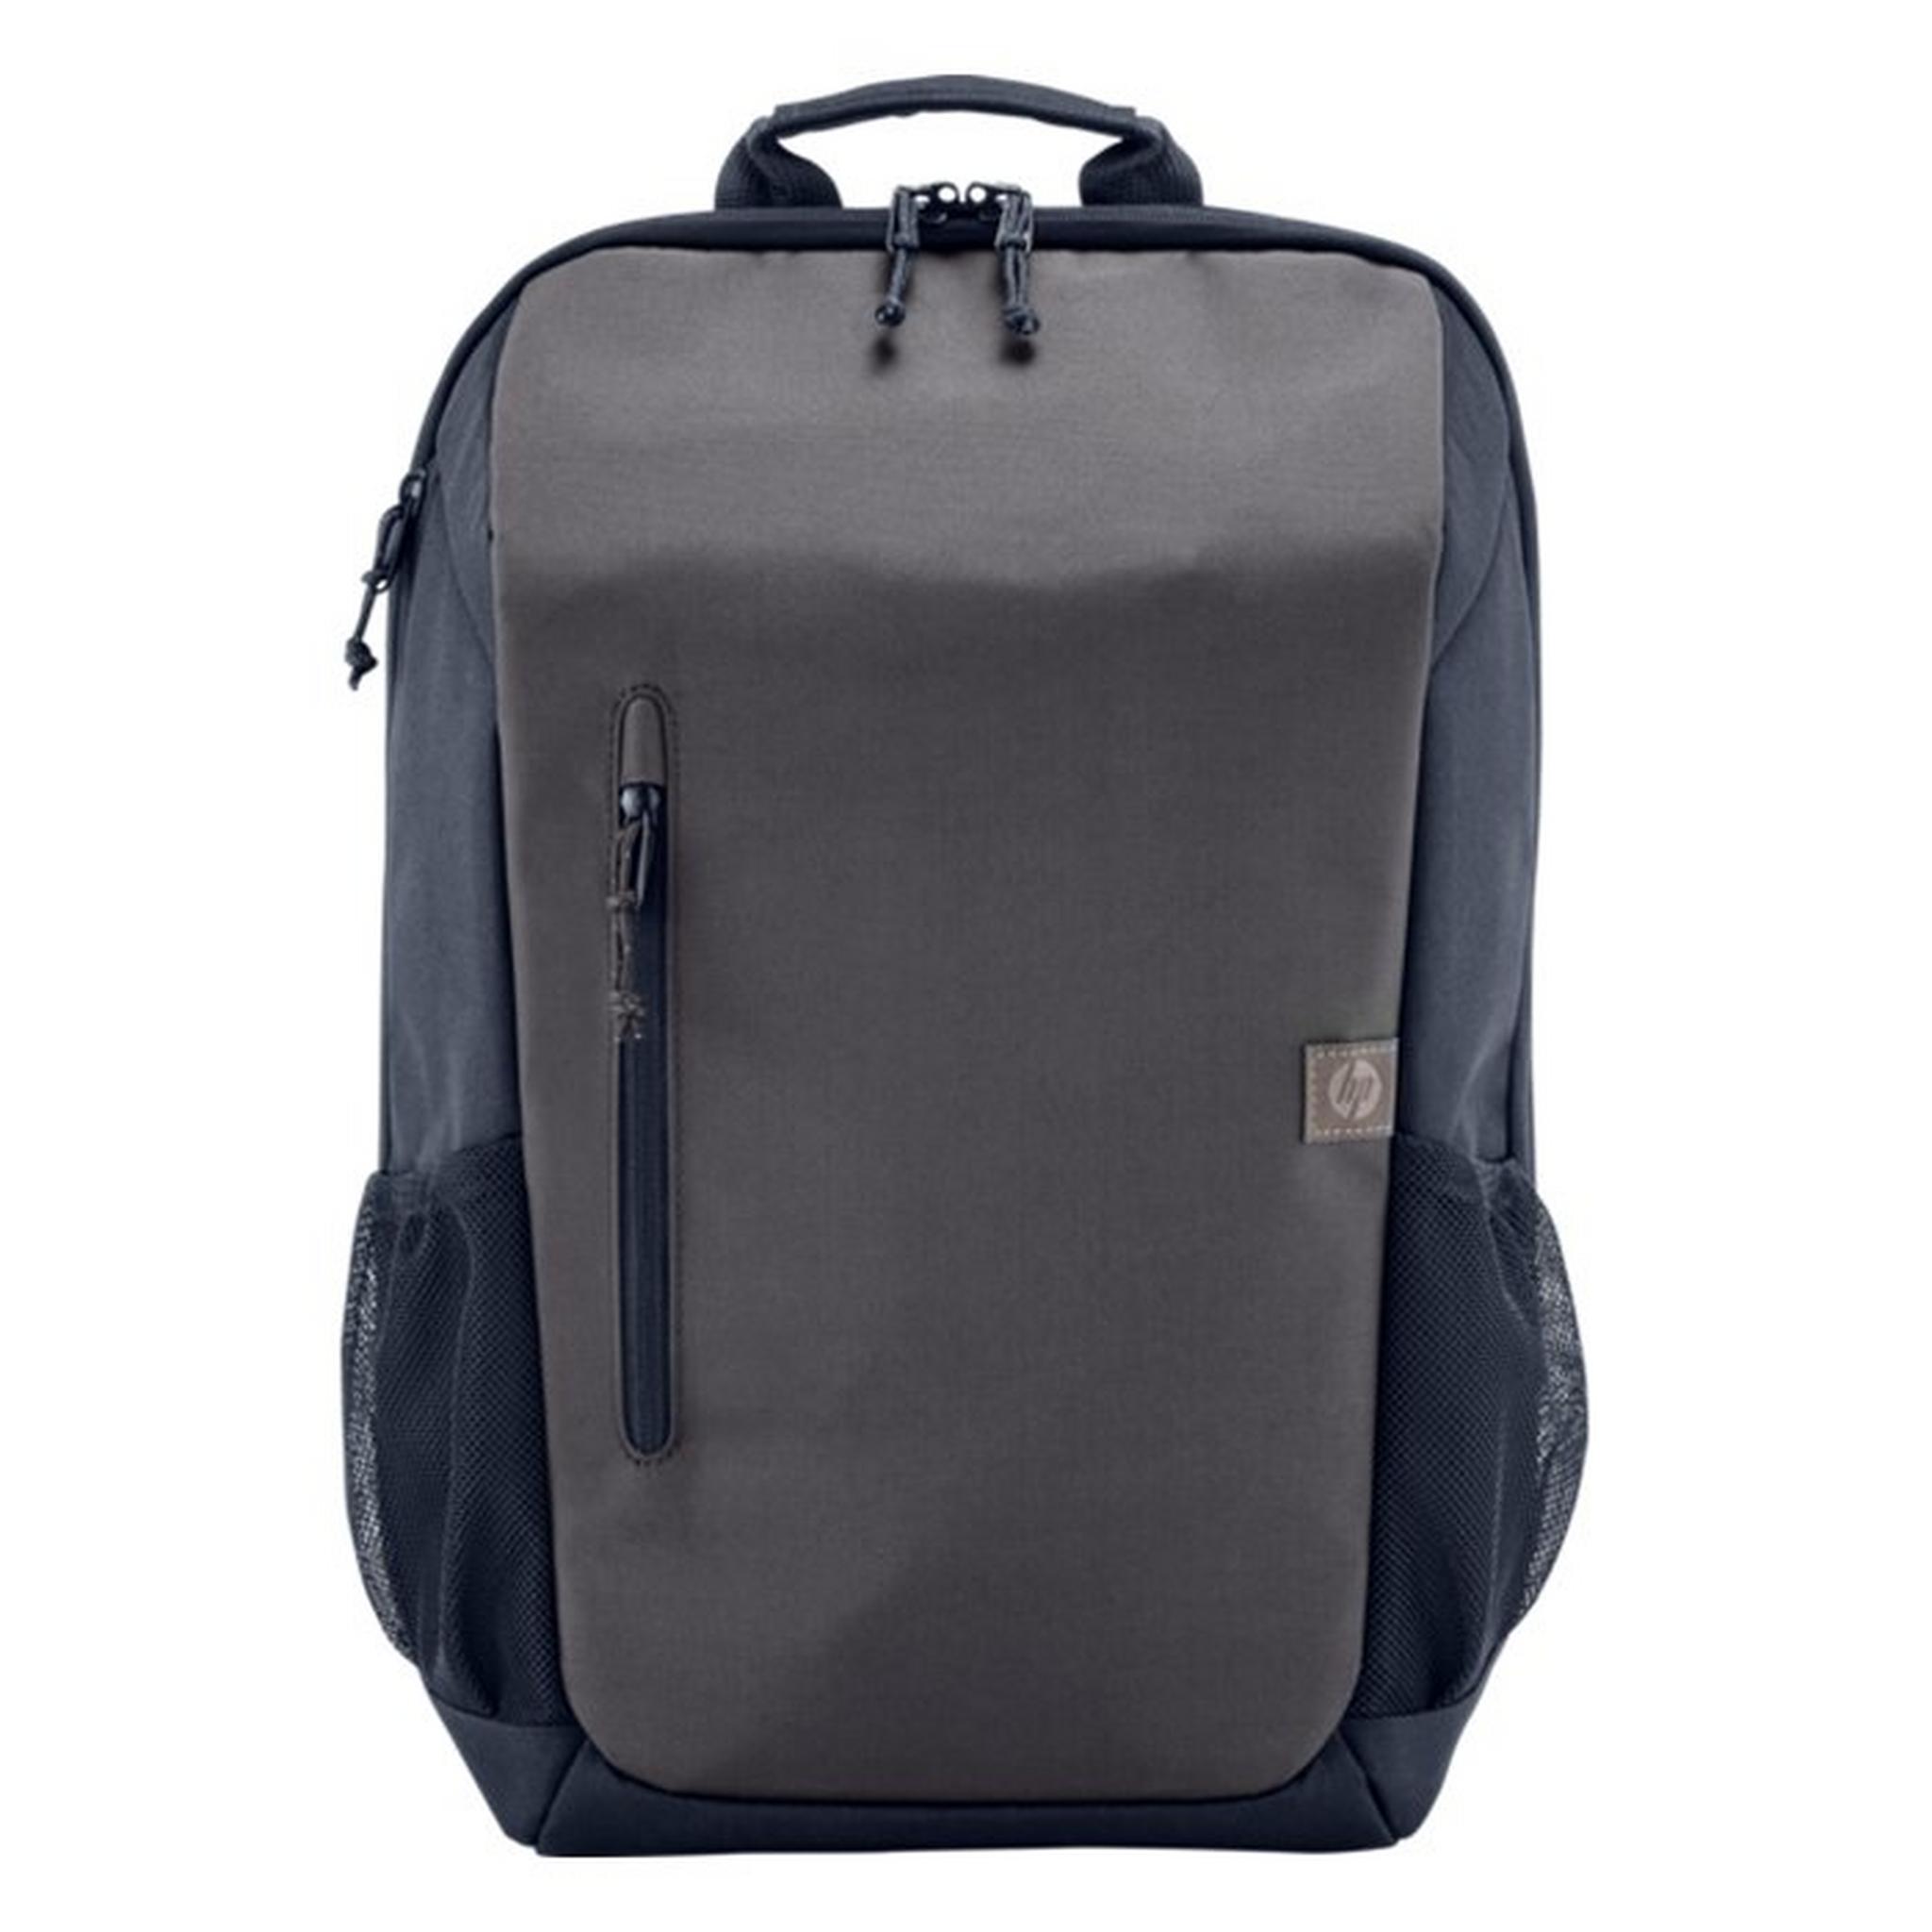 HP Travel Laptop Backpack, 15.6-inch, 6B8U6AA – Grey